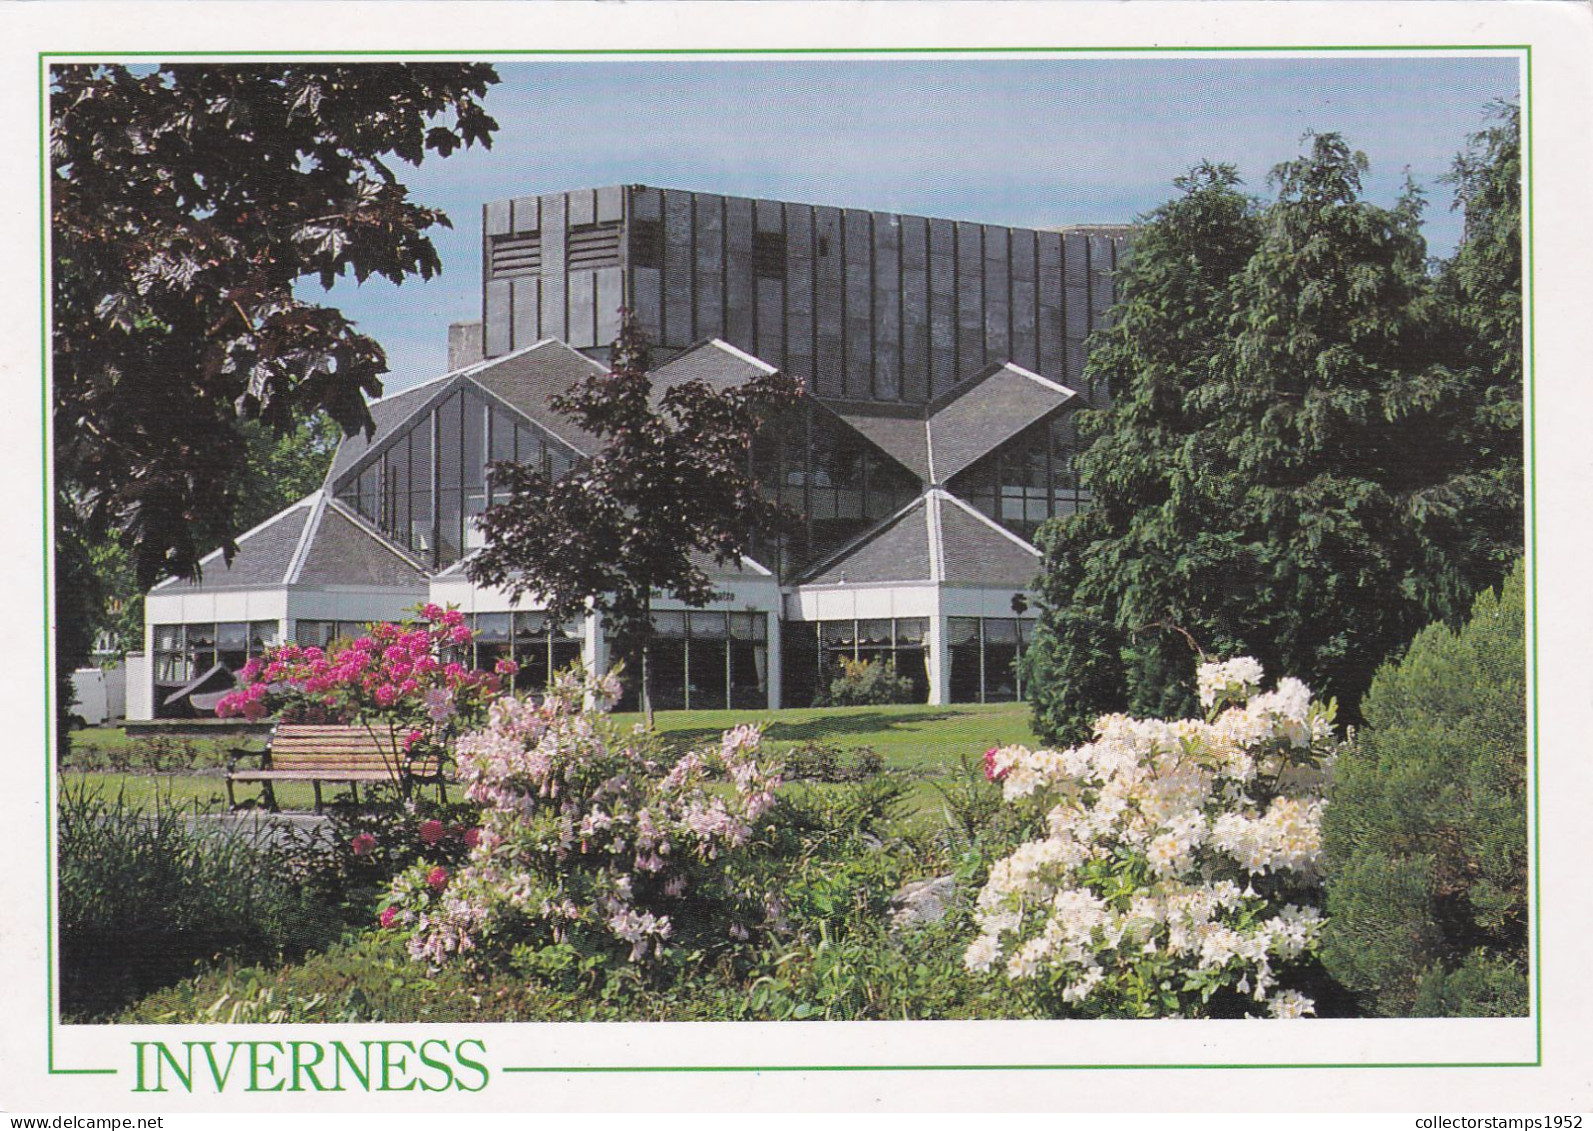 INVERNESS, BUILDINGS, SCOTLAND, UNITED KINGDOM - Inverness-shire